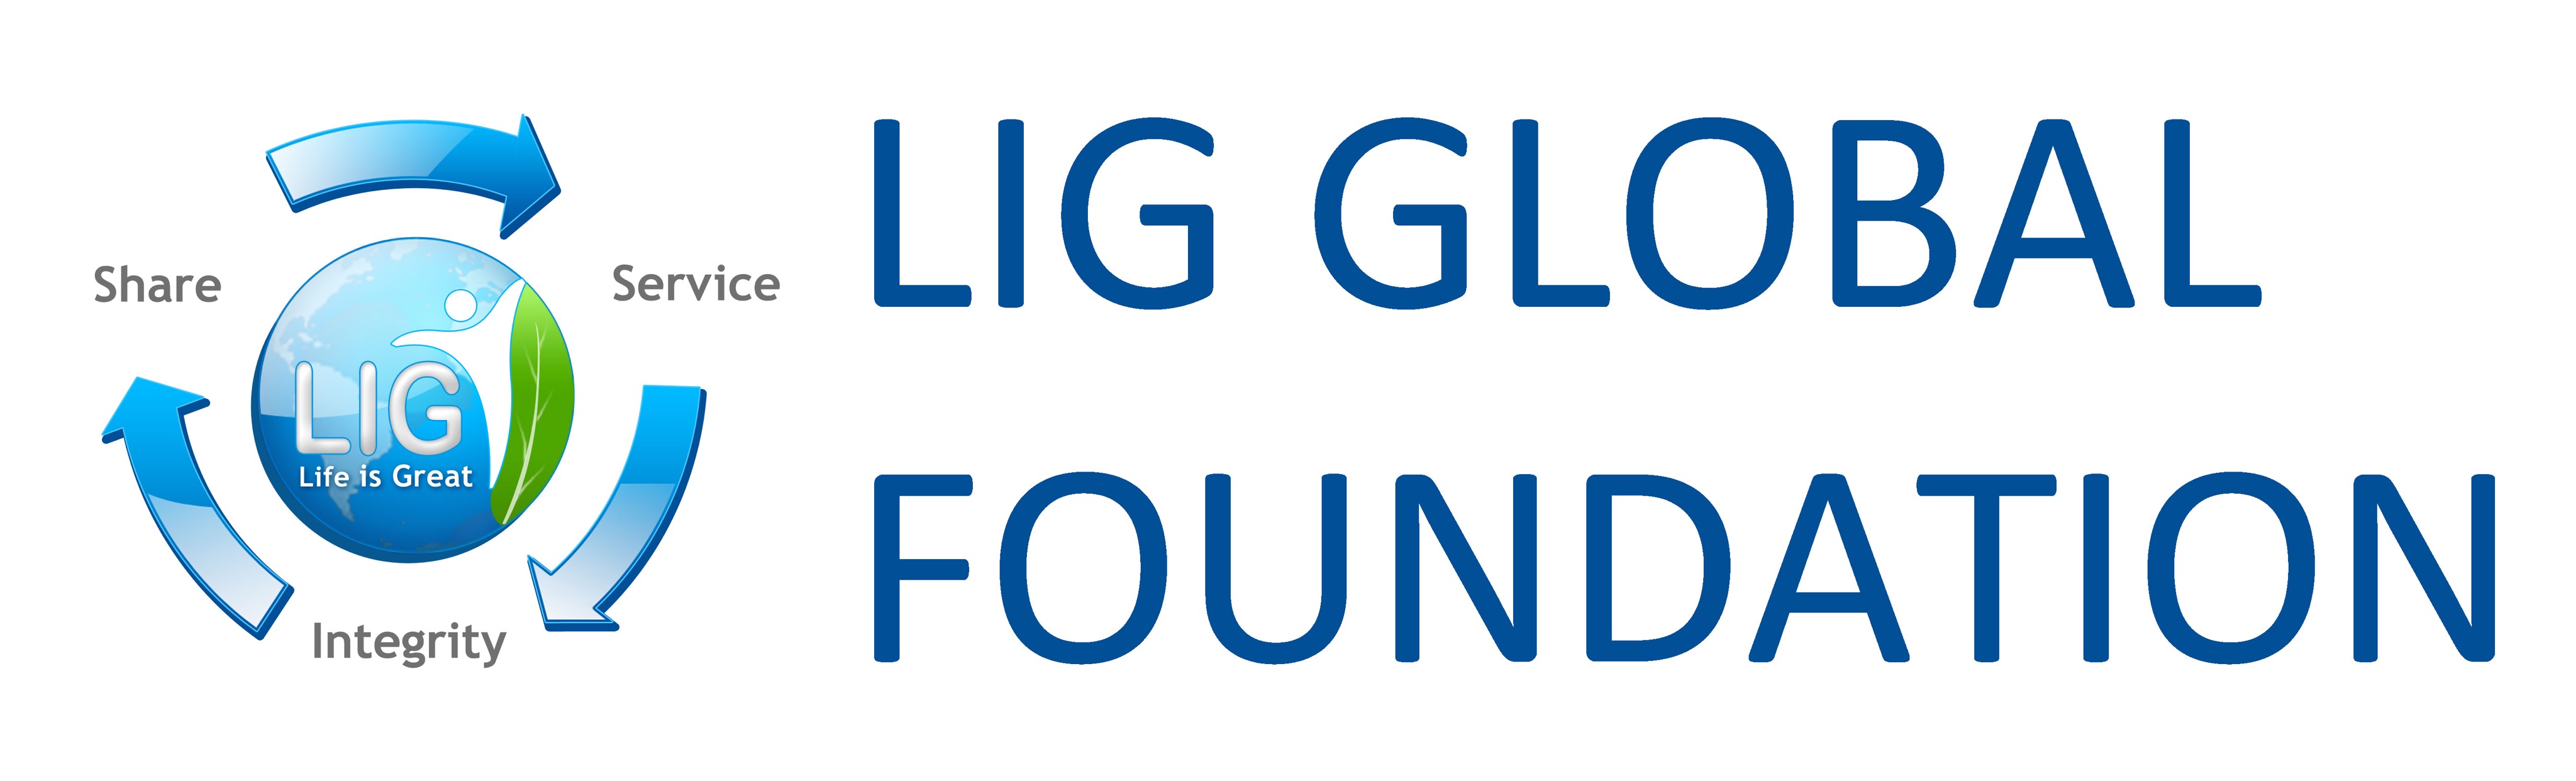 Lig Global Foundation logo